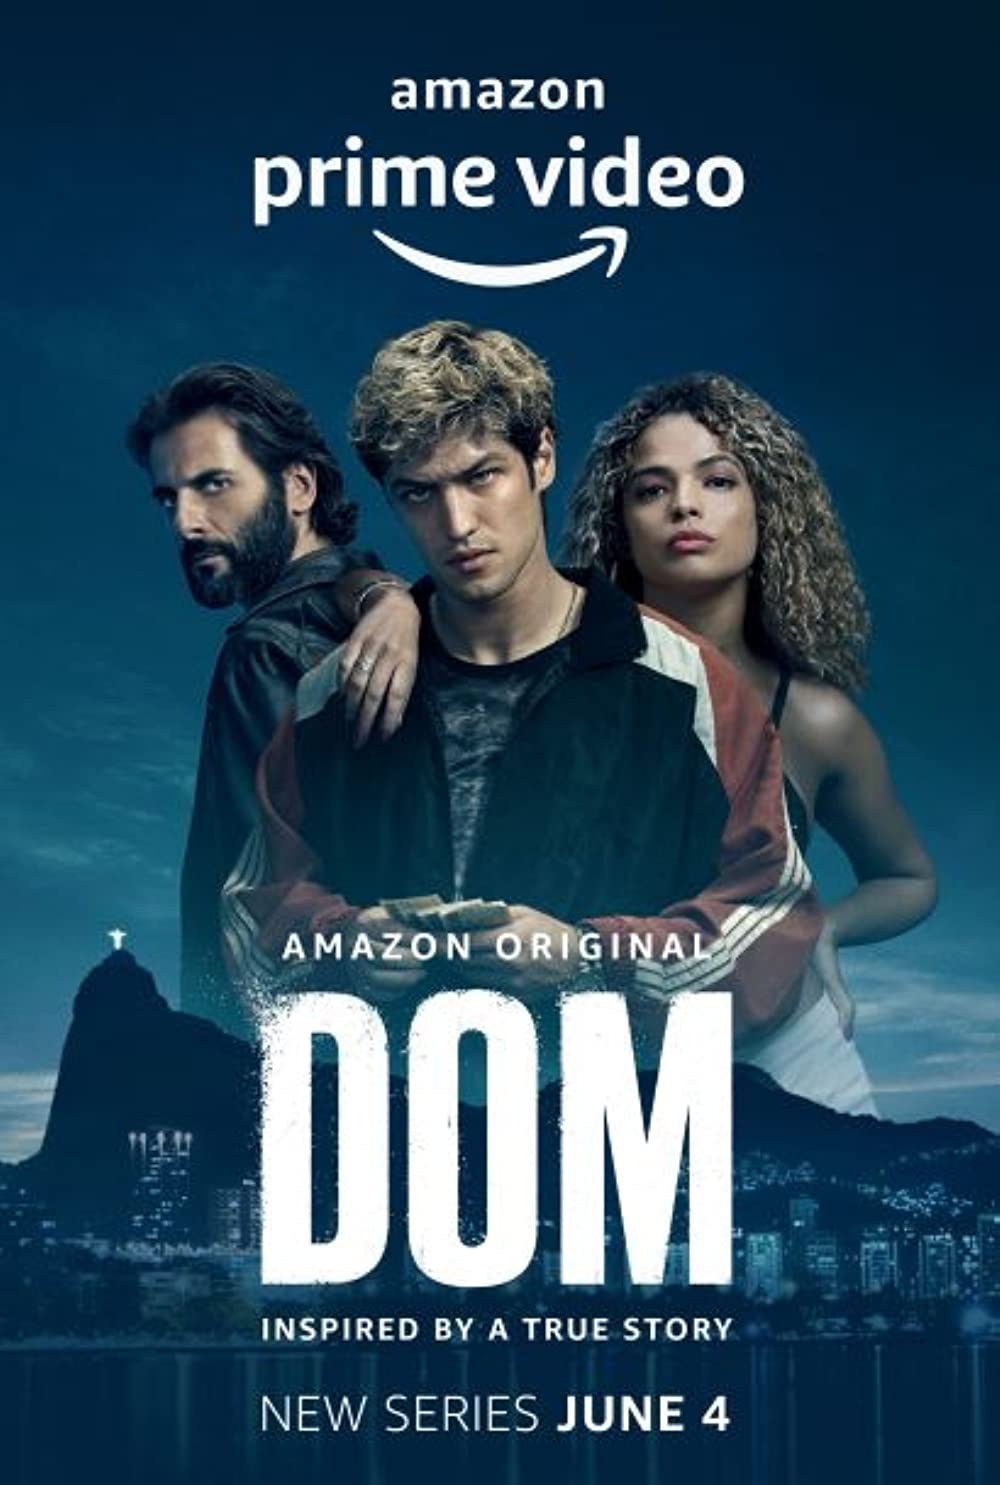 Dom - Staffel 1